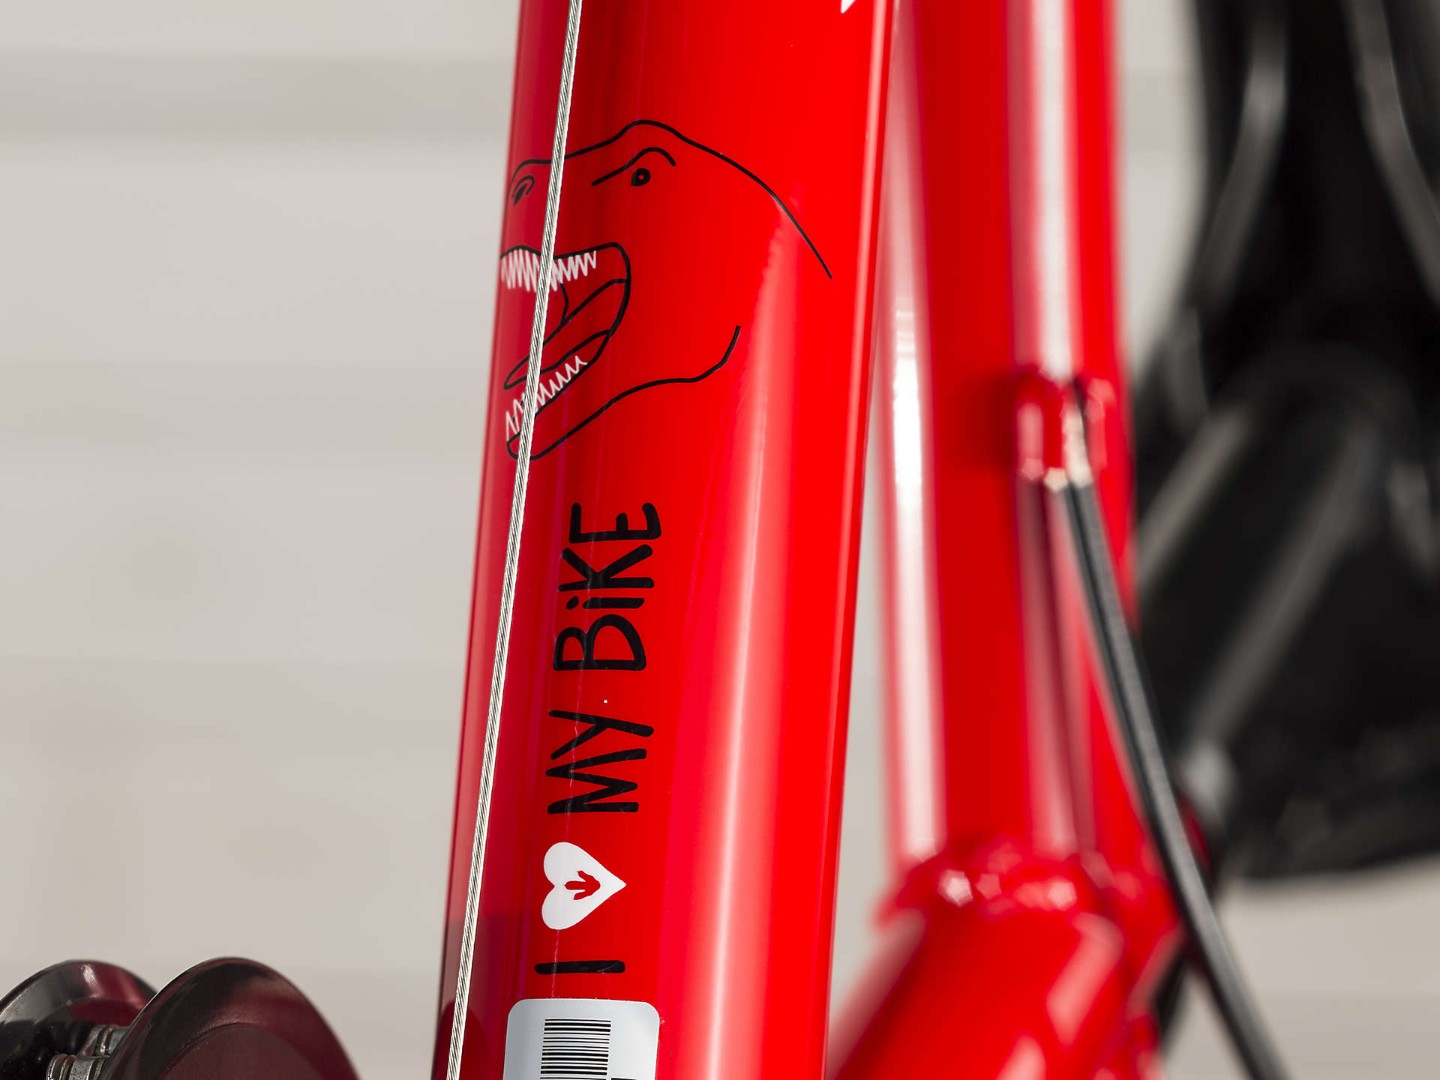 Велосипед Trek Precaliber 20 Boys 2019 Viper Red